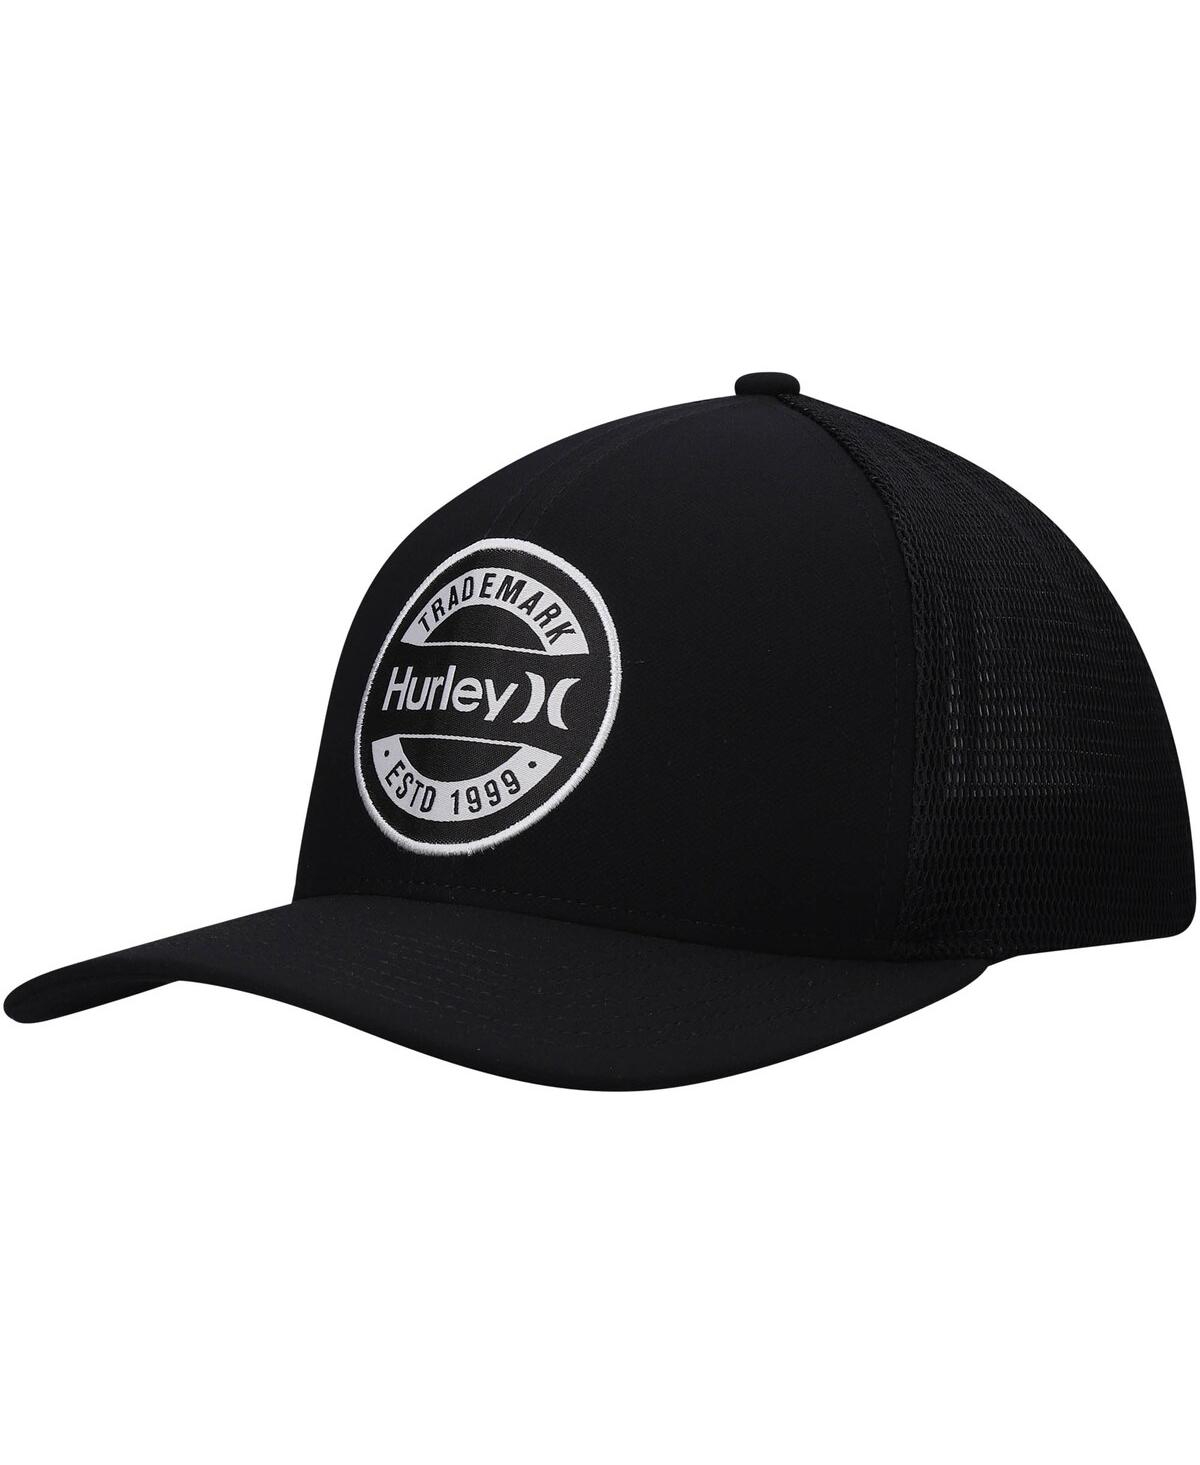 Hurley Men's  Black Charter Trucker Snapback Hat